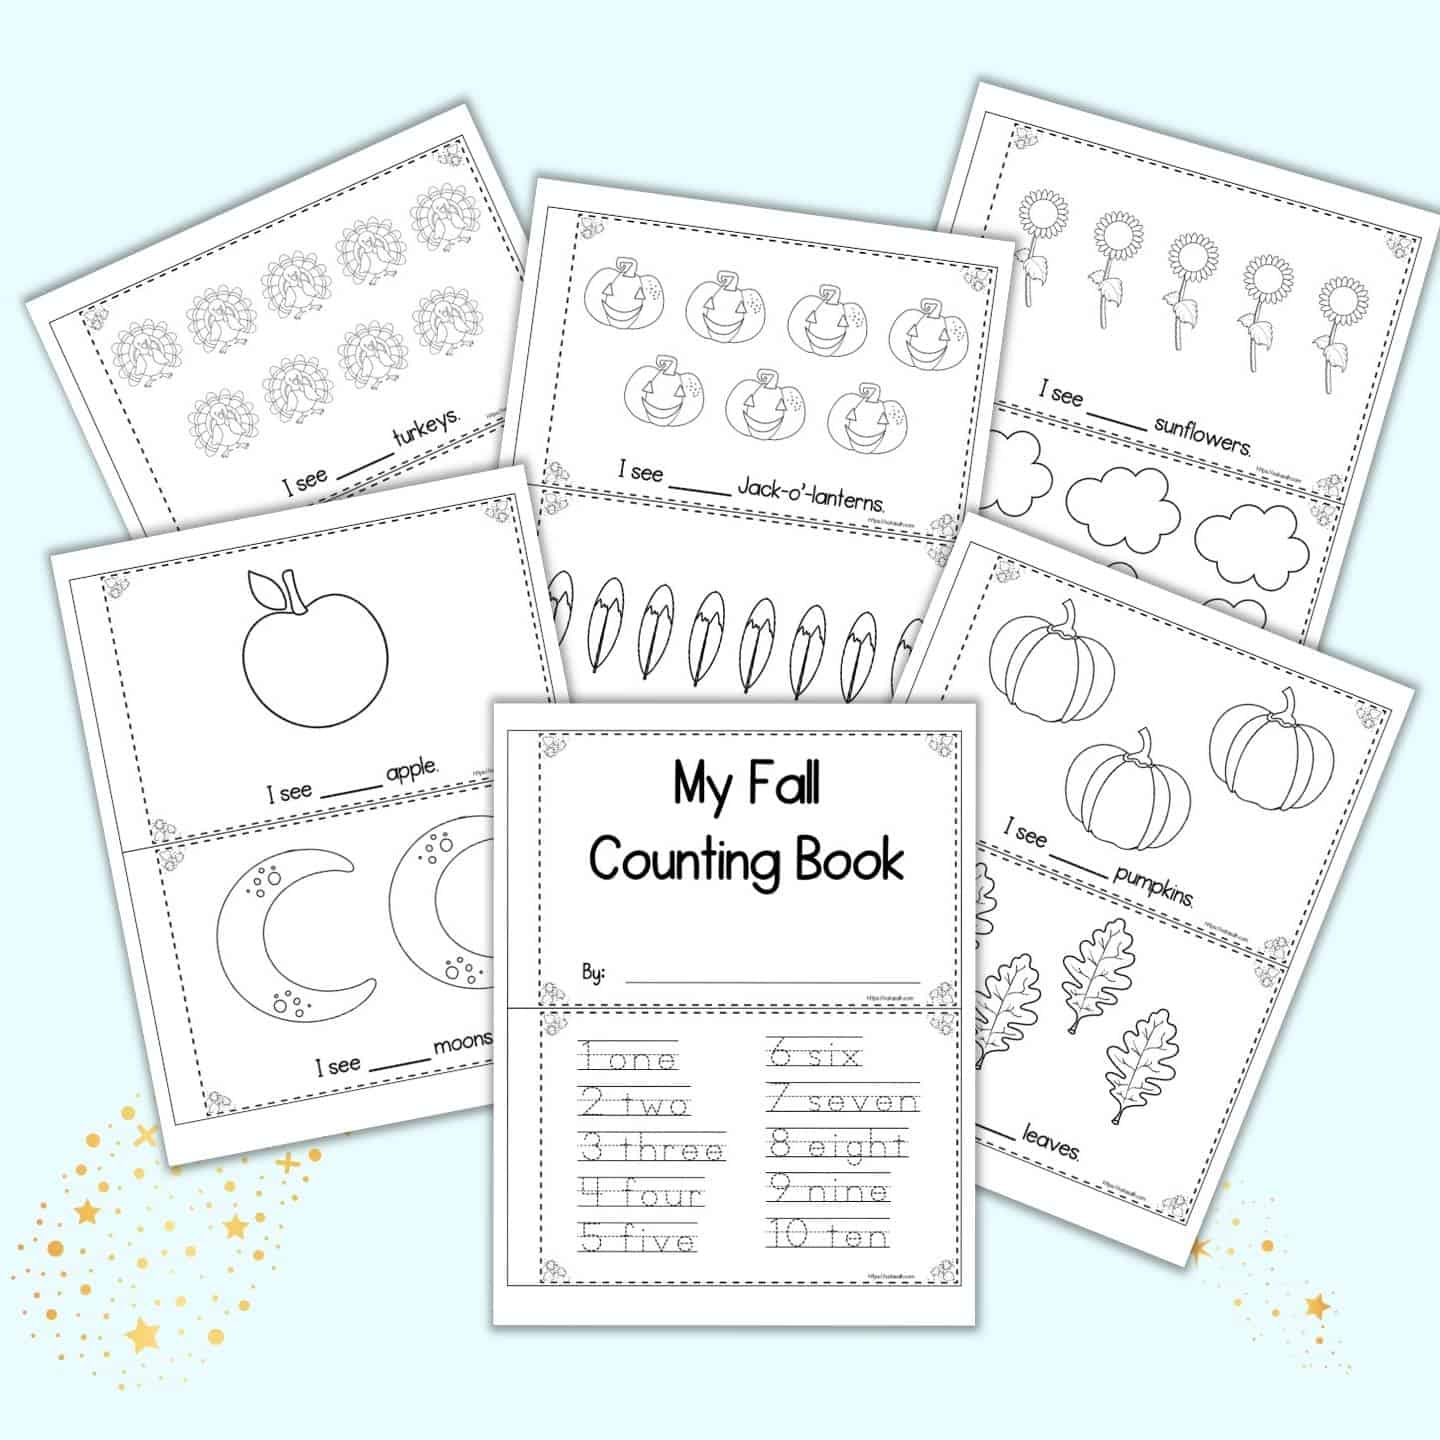 Free Printable Fall Counting Book For Preschool And Kindergarten The Artisan Life 